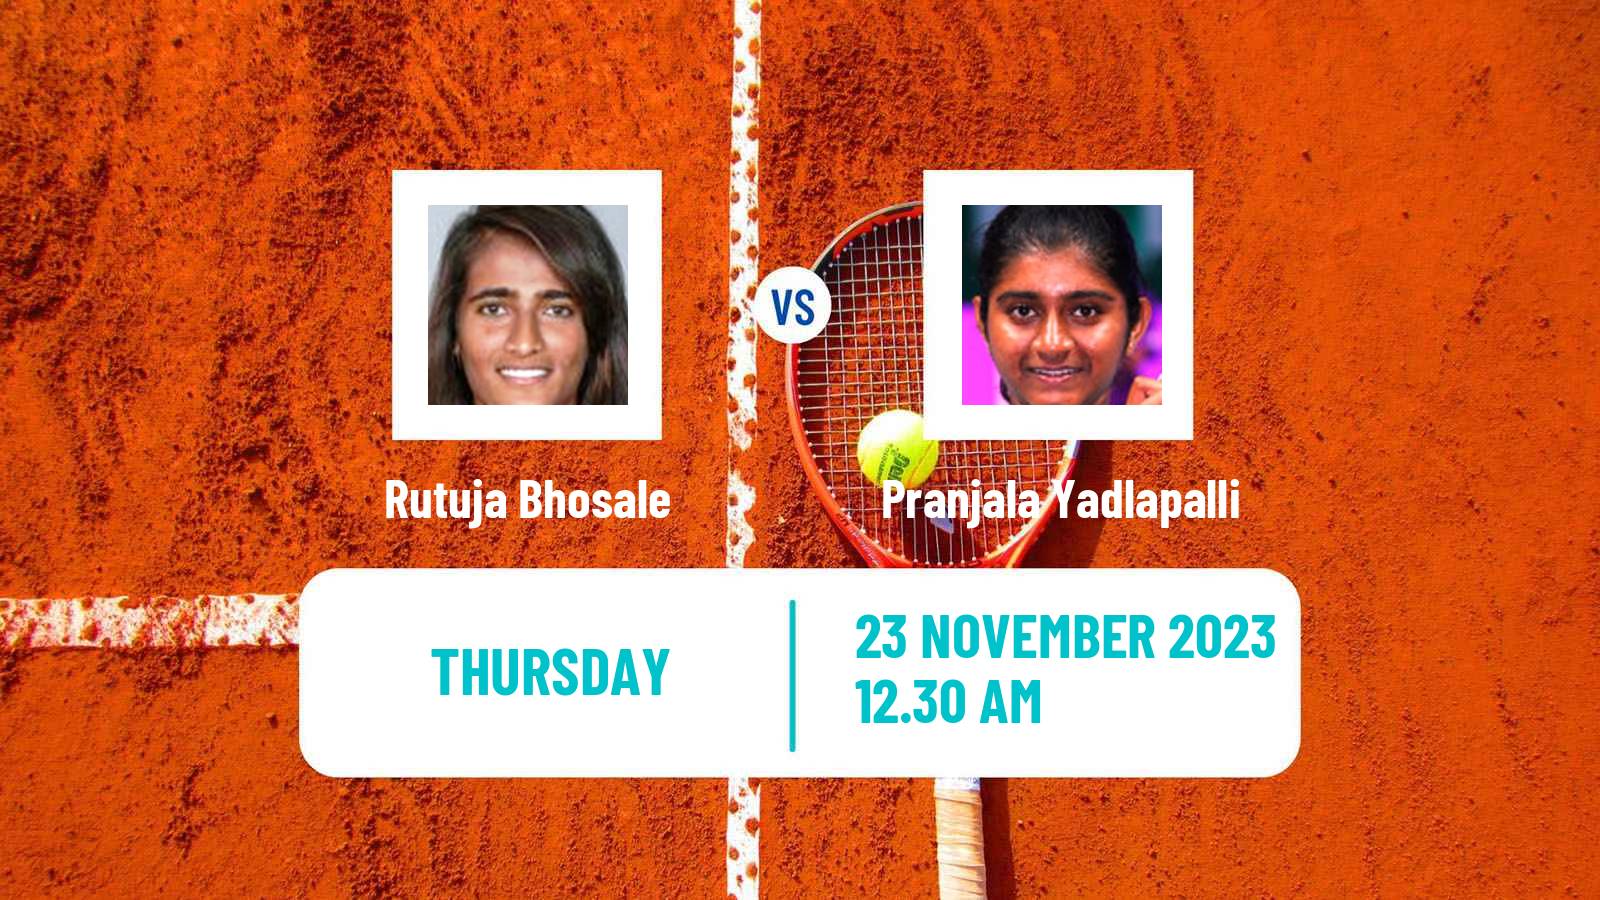 Tennis ITF W25 Bengaluru 2 Women Rutuja Bhosale - Pranjala Yadlapalli